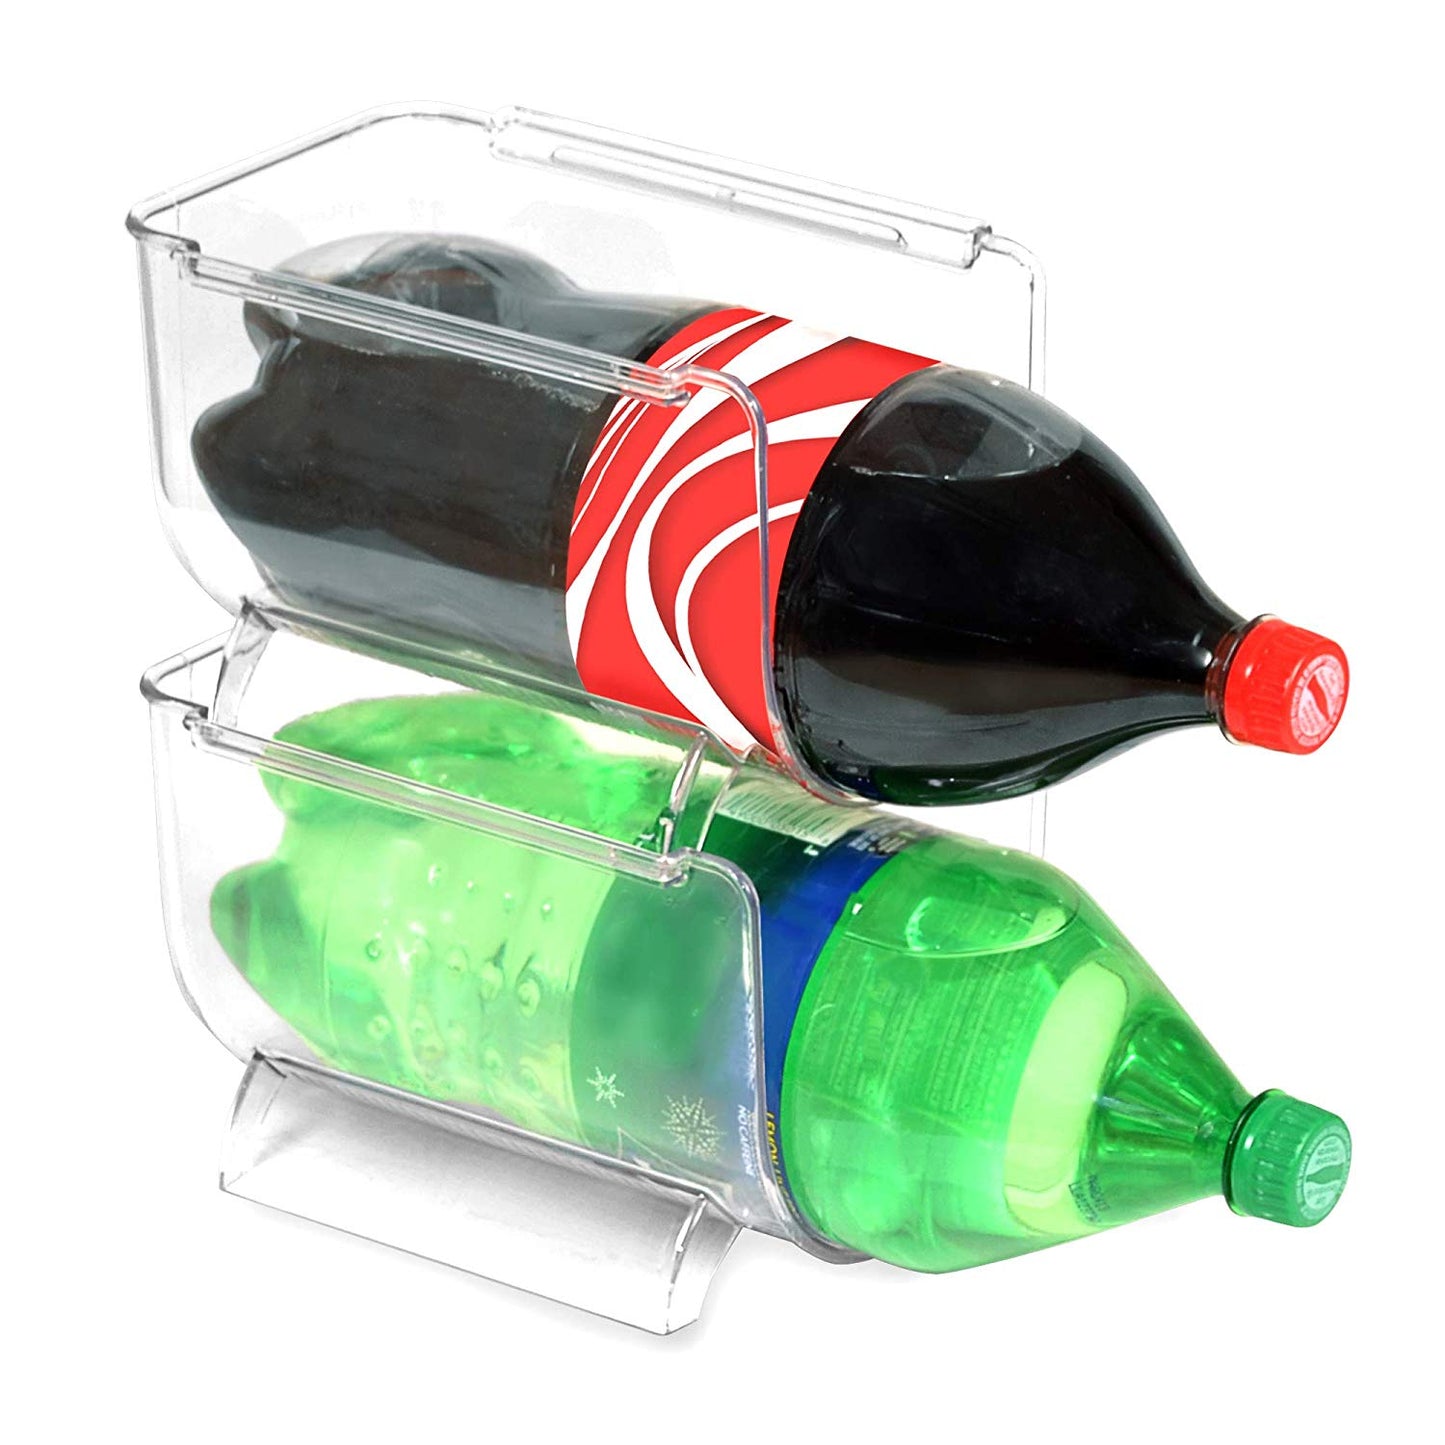 Smart Design Refrigerator Soda Bottle Holder w/Handle - Holds 2 Liter Bottle - BPA Free Plastic - for Fridge, Freezer, Pantry Organization - Kitchen (8.15 x 5.25 Inch) [Clear]